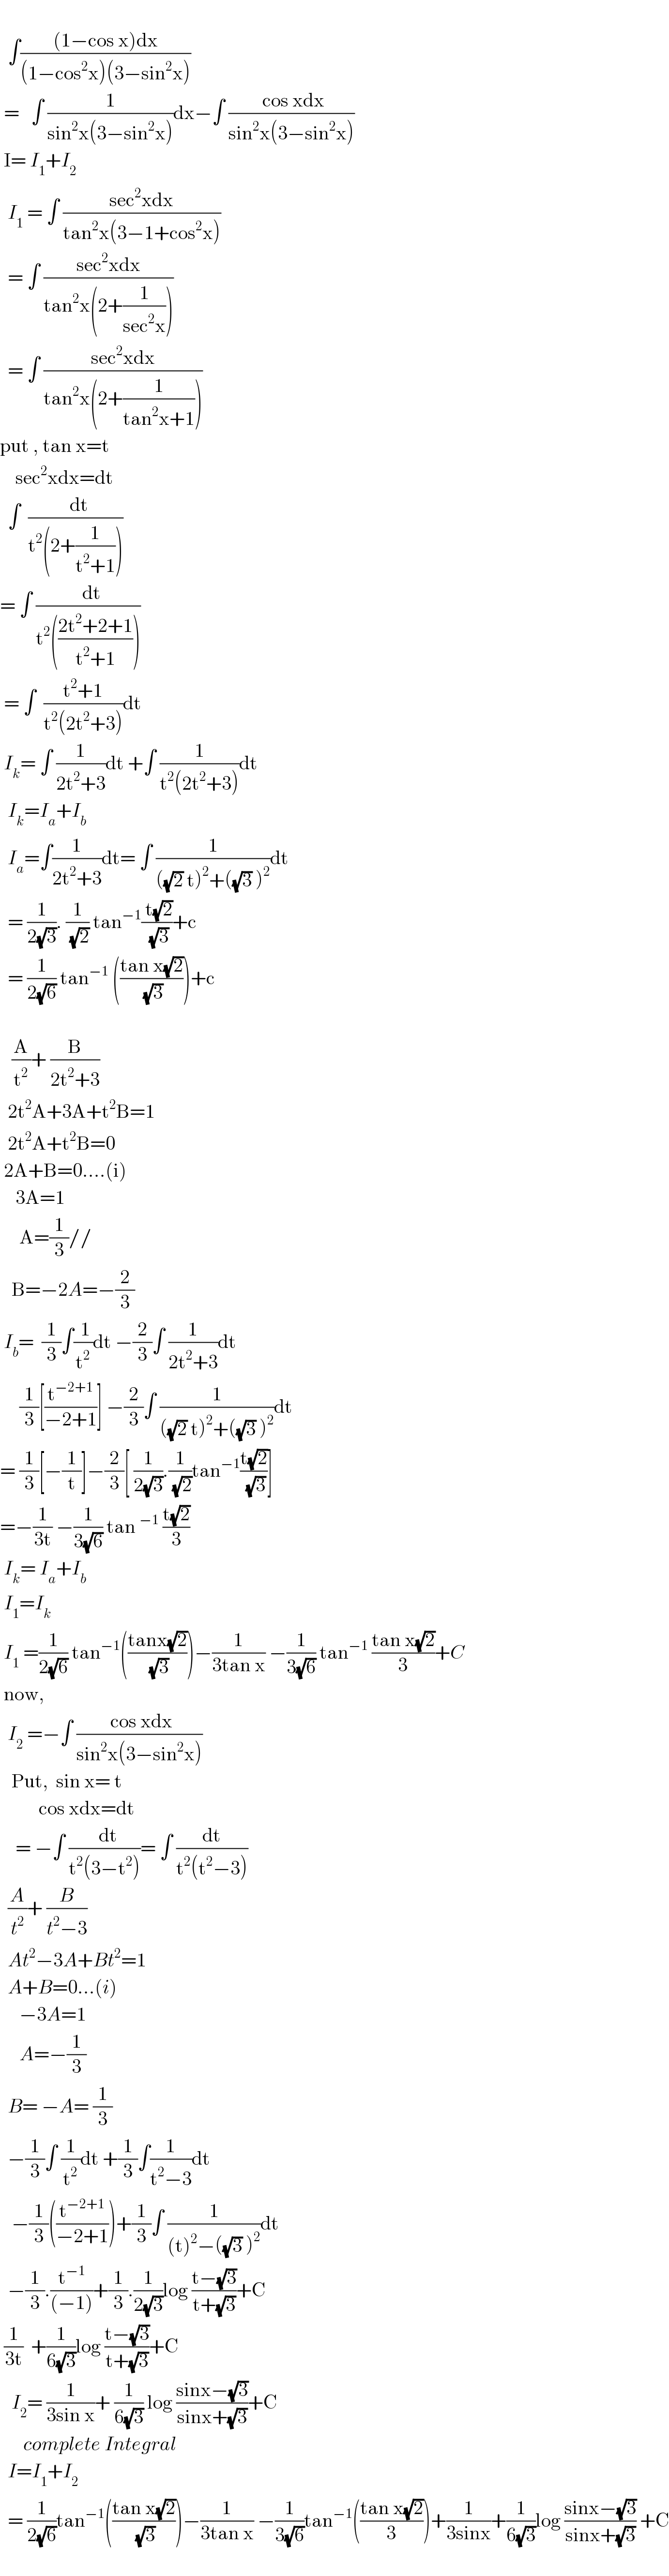     ∫(((1−cos x)dx)/((1−cos^2 x)(3−sin^2 x)))   =   ∫ (1/(sin^2 x(3−sin^2 x)))dx−∫ (( cos xdx)/(sin^2 x(3−sin^2 x)))   I= I_1 +I_2     I_1  = ∫ ((sec^2 xdx)/(tan^2 x(3−1+cos^2 x)))    = ∫ ((sec^2 xdx)/(tan^2 x(2+(1/(sec^2 x)))))    = ∫ ((sec^2 xdx)/(tan^2 x(2+(1/(tan^2 x+1)))))  put , tan x=t      sec^2 xdx=dt    ∫  ((  dt)/(t^2 (2+(1/(t^2 +1)))))  = ∫ ((  dt)/(t^2 (((2t^2 +2+1)/(t^2 +1)))))   = ∫  ((t^2 +1)/(t^2 (2t^2 +3)))dt   I_k = ∫ (1/(2t^2 +3))dt +∫ (1/(t^2 (2t^2 +3)))dt    I_k =I_a +I_b     I_a =∫(1/(2t^2 +3))dt= ∫ (1/(((√2) t)^2 +((√3) )^2 ))dt    = (1/(2(√3))). (1/(√2)) tan^(−1) (( t(√2))/(√3))+c    = (1/(2(√6))) tan^(−1)  (((tan x(√2))/(√3)))+c         (A/t^2 )+ (B/(2t^2 +3))    2t^2 A+3A+t^2 B=1    2t^2 A+t^2 B=0   2A+B=0....(i)      3A=1         A=(1/3)//     B=−2A=−(2/3)   I_b =  (1/3)∫(( 1)/t^2 )dt −(2/3)∫ (1/(2t^2 +3))dt       (1/3)[(t^(−2+1) /(−2+1))] −(2/3)∫ (1/(((√2) t)^2 +((√3) )^2 ))dt  = (1/3)[−(1/t)]−(2/3)[ (1/(2(√3))).(1/(√2))tan^(−1) ((t(√2))/(√3))]  =−(1/(3t)) −(1/(3(√6))) tan^(−1)  ((t(√2))/3)   I_k = I_a +I_b    I_1 =I_k    I_1  =(1/(2(√6))) tan^(−1) (((tanx(√2))/(√3)))−(1/(3tan x)) −(1/(3(√6))) tan^(−1)  ((tan x(√2))/3)+C   now,    I_2  =−∫ (( cos xdx)/(sin^2 x(3−sin^2 x)))     Put,  sin x= t            cos xdx=dt      = −∫ ((  dt)/(t^2 (3−t^2 )))= ∫ (dt/(t^2 (t^2 −3)))    (A/t^2 )+ (B/(t^2 −3))    At^2 −3A+Bt^2 =1    A+B=0...(i)       −3A=1       A=−(1/3)    B= −A= (1/3)    −(1/3)∫ (1/t^2 )dt +(1/3)∫(1/(t^2 −3))dt     −(1/3)((t^(−2+1) /(−2+1)))+(1/3)∫ (1/((t)^2 −((√3) )^2 ))dt    −(1/3).(t^(−1) /((−1)))+(1/3).(1/(2(√3)))log ((t−(√3))/(t+(√3)))+C   (1/(3t))  +(1/(6(√3)))log ((t−(√3))/(t+(√3)))+C     I_2 = (1/(3sin x))+ (1/(6(√3))) log ((sinx−(√3))/(sinx+(√3)))+C        complete Integral     I=I_1 +I_2     = (1/(2(√6)))tan^(−1) (((tan x(√2))/(√3)))−(1/(3tan x)) −(1/(3(√6)))tan^(−1) (((tan x(√2))/3))+(1/(3sinx))+(1/(6(√3)))log ((sinx−(√3))/(sinx+(√3))) +C    